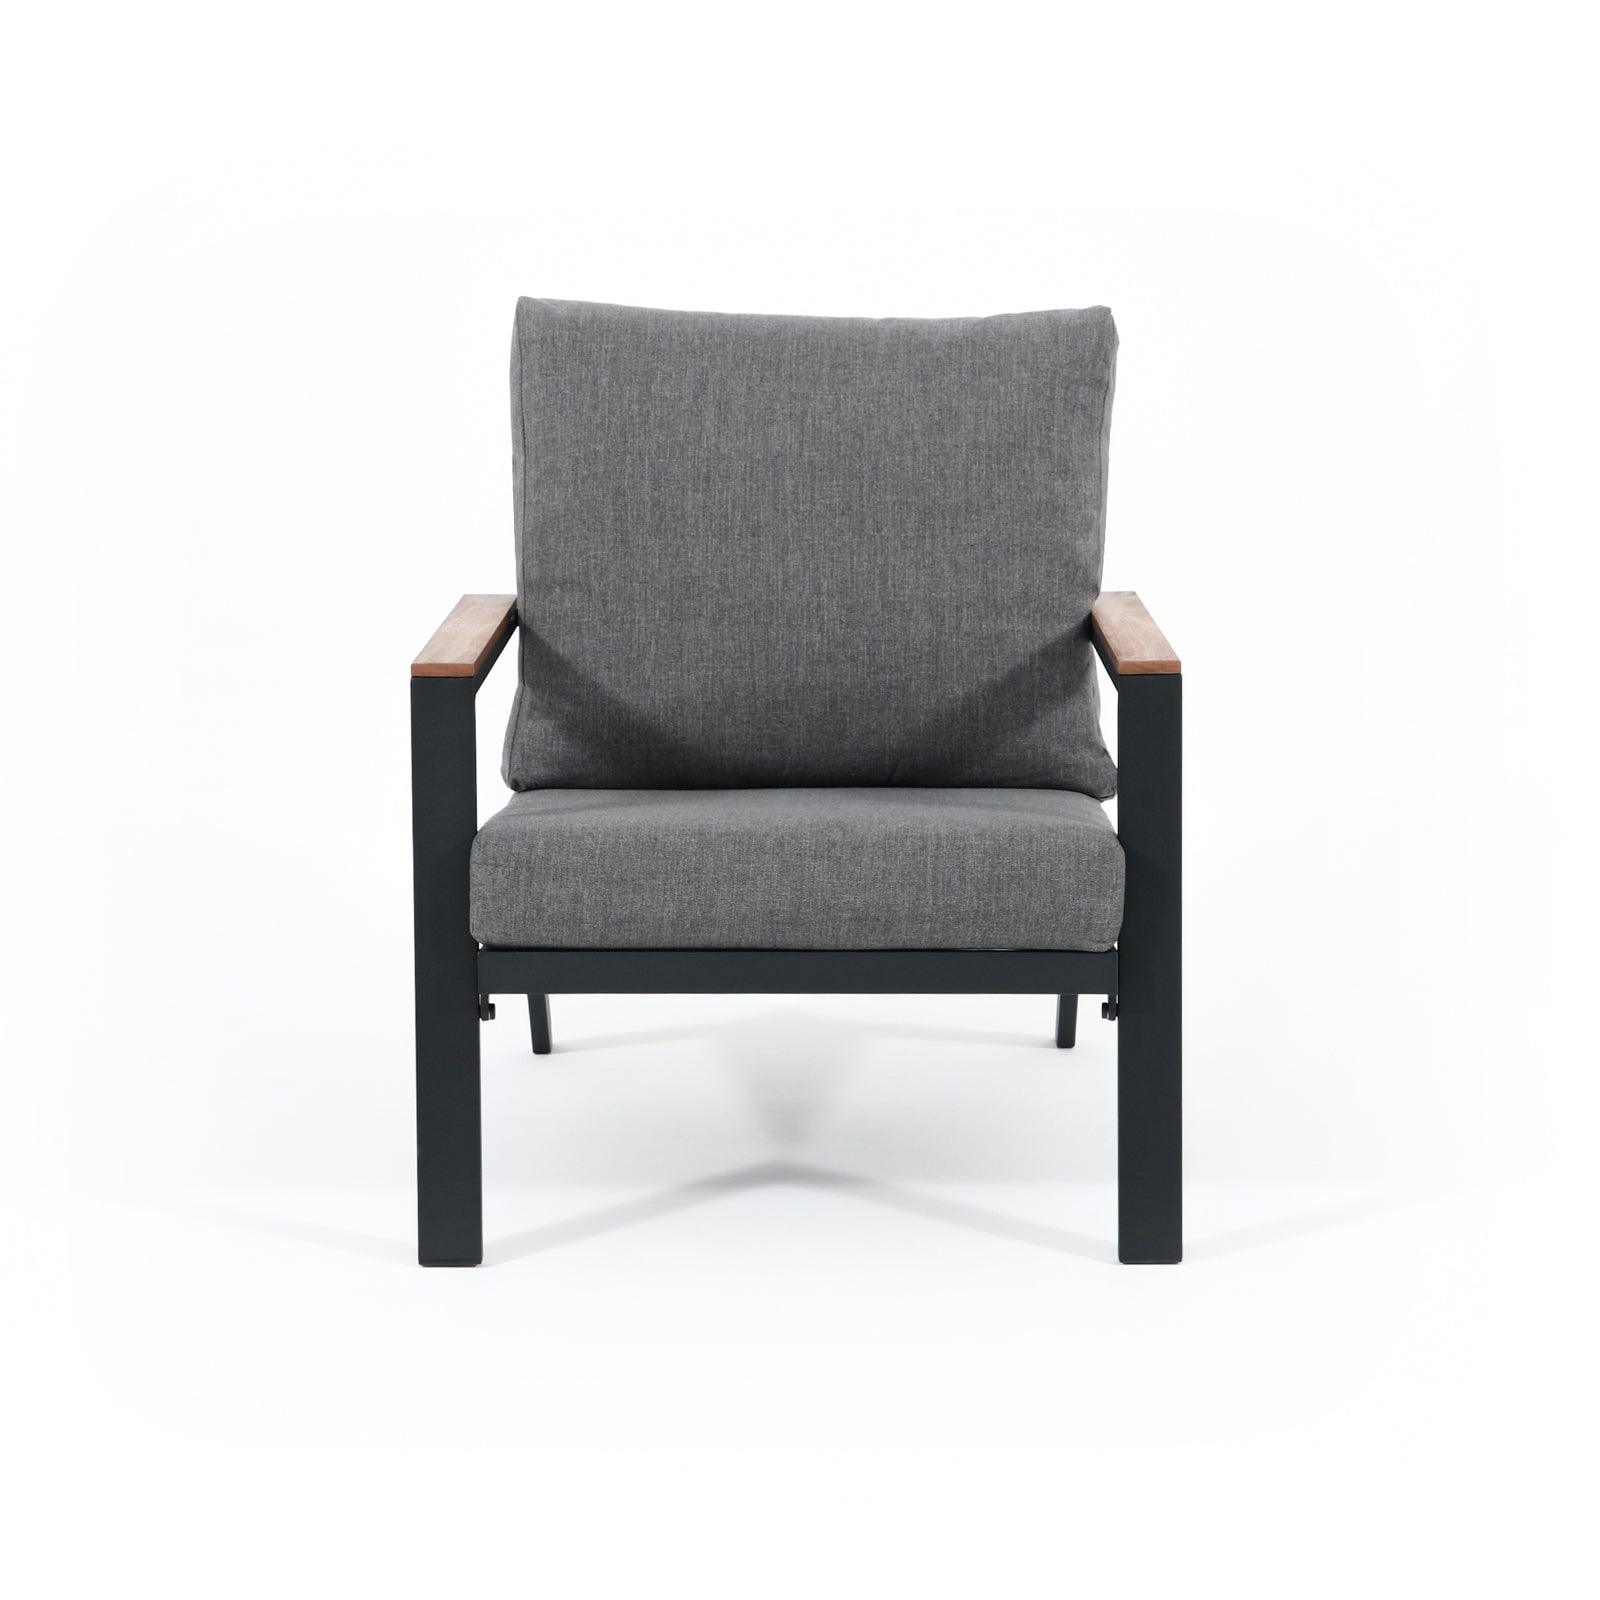 Ronda Grey Aluminum Lounge Chairs with Grey Cushions, wood finish armrest, front view- Jardina Furniture